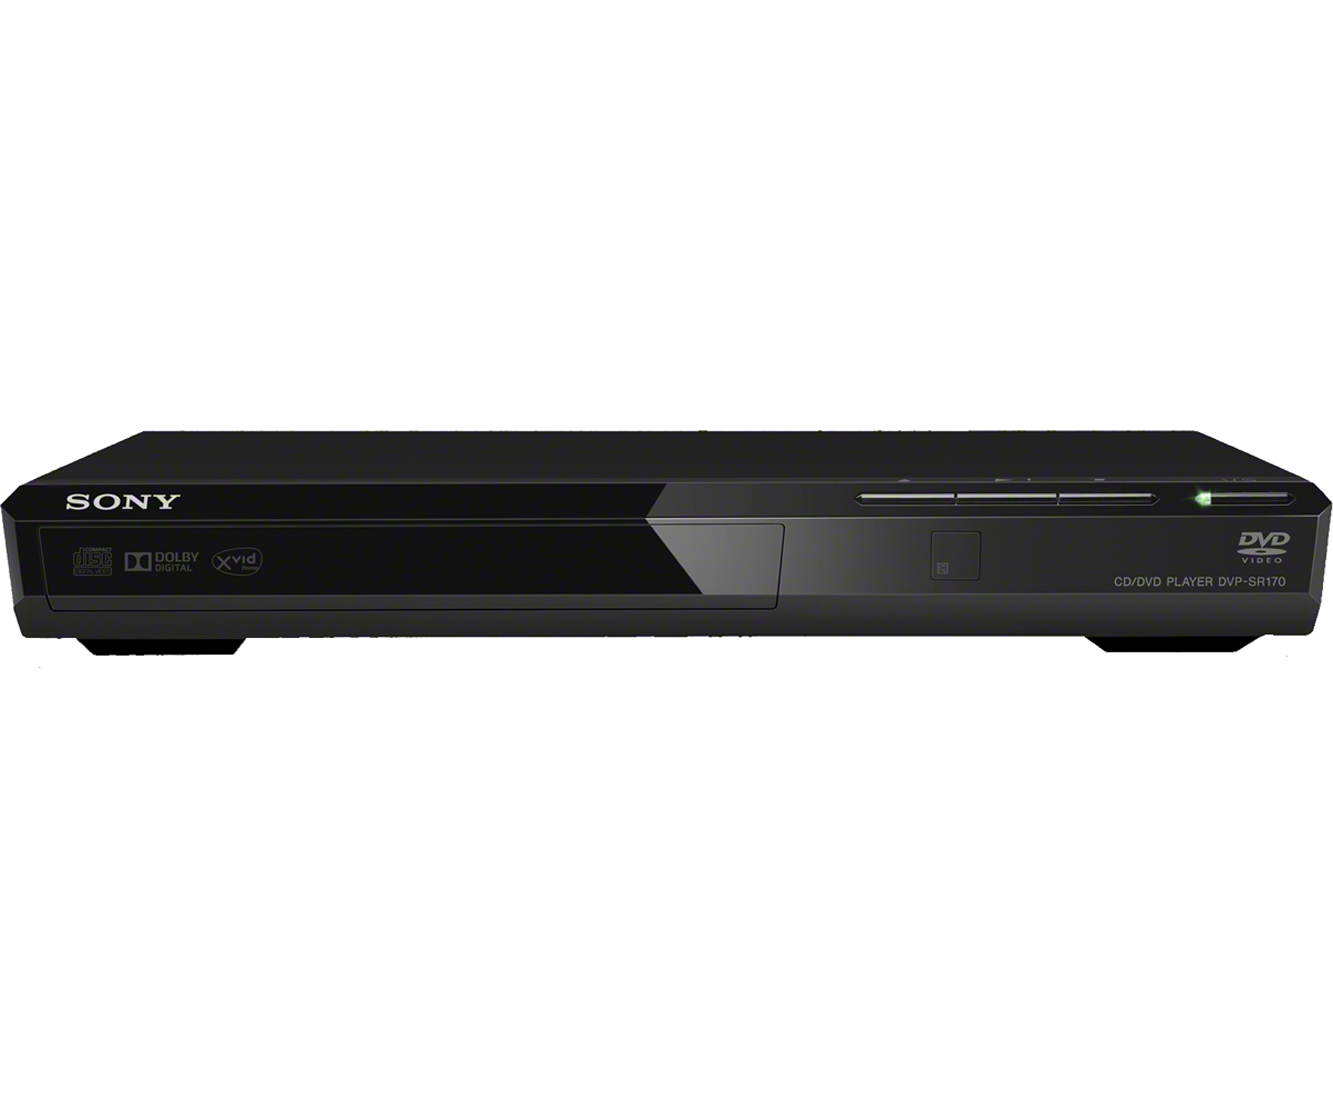 Sony DVPSR170 DVD Player Review